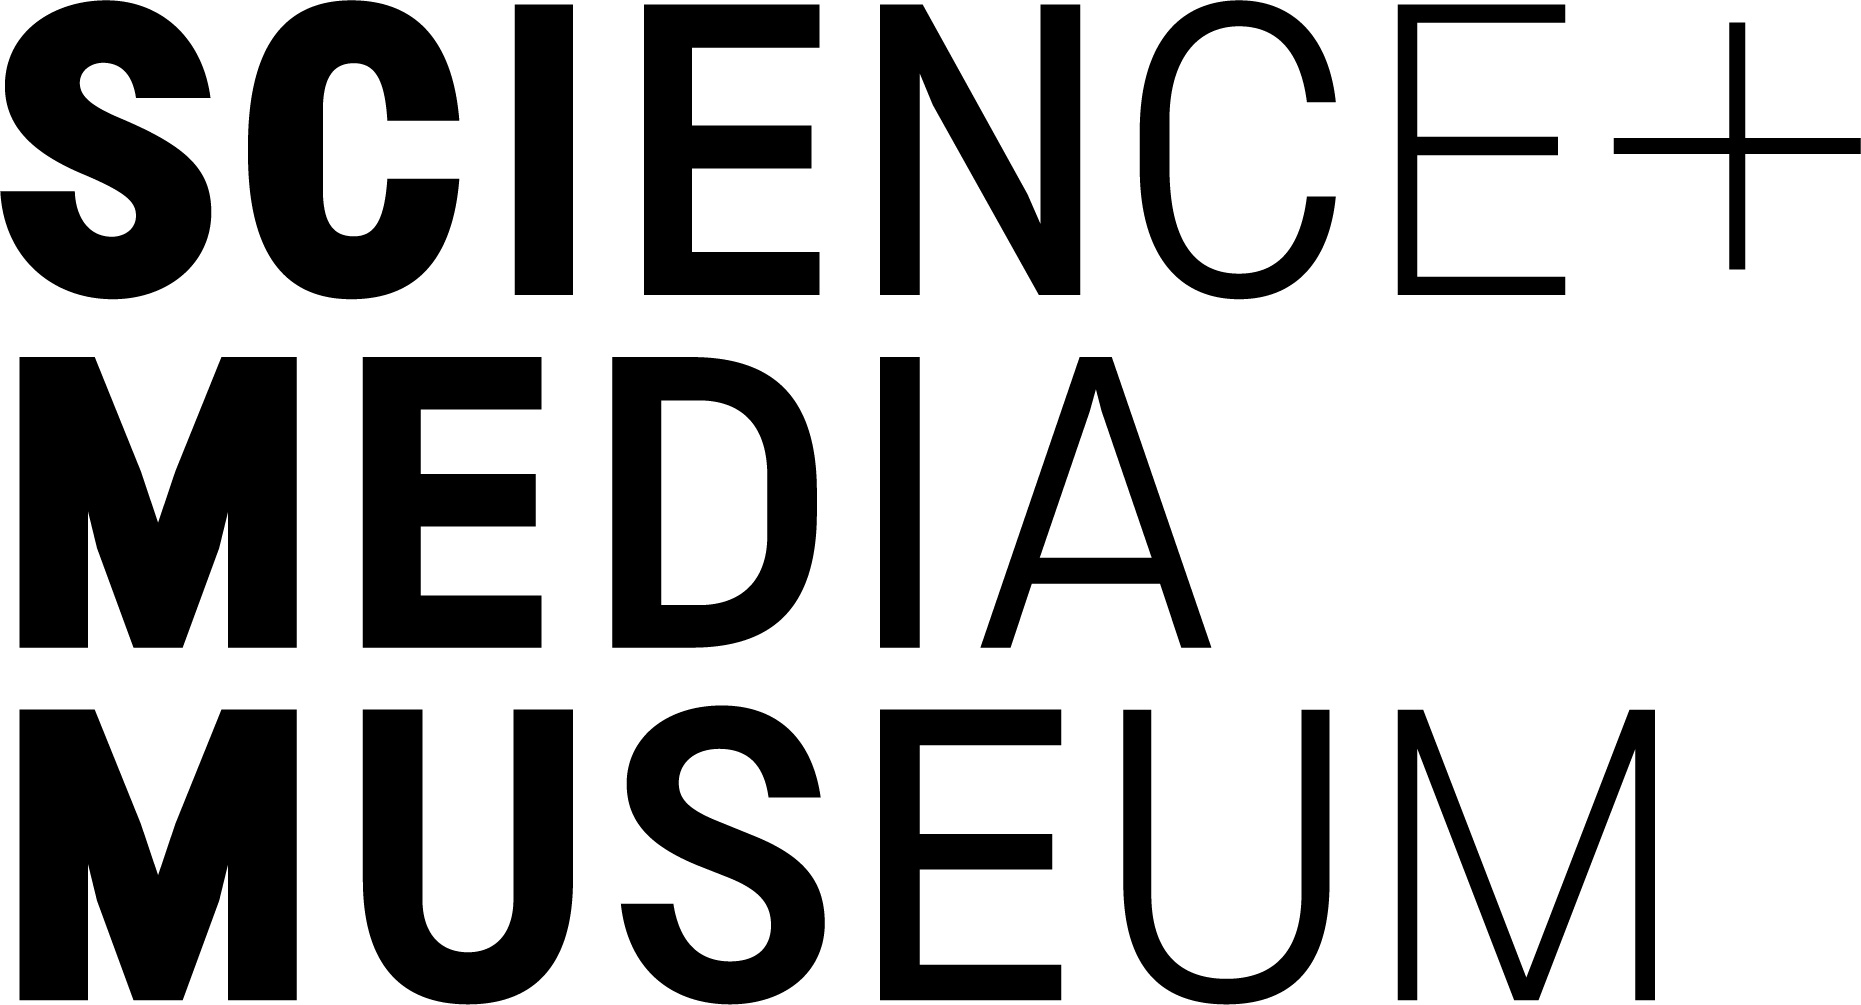 Science Media Museum